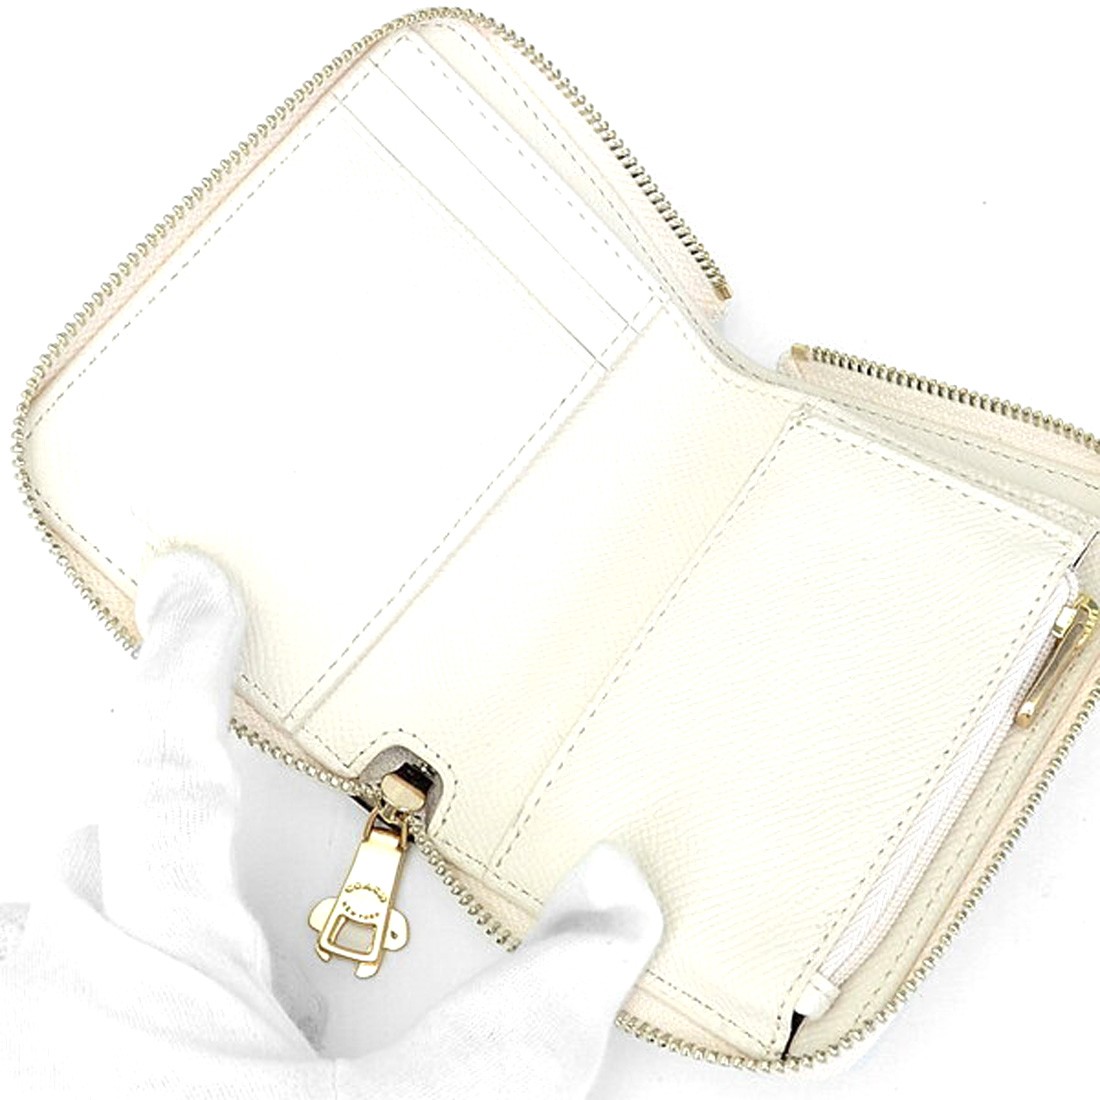 NWT COACH Small Zip Zipper Around Wallet Billfold Card Case Daisy Flower Leather | eBay